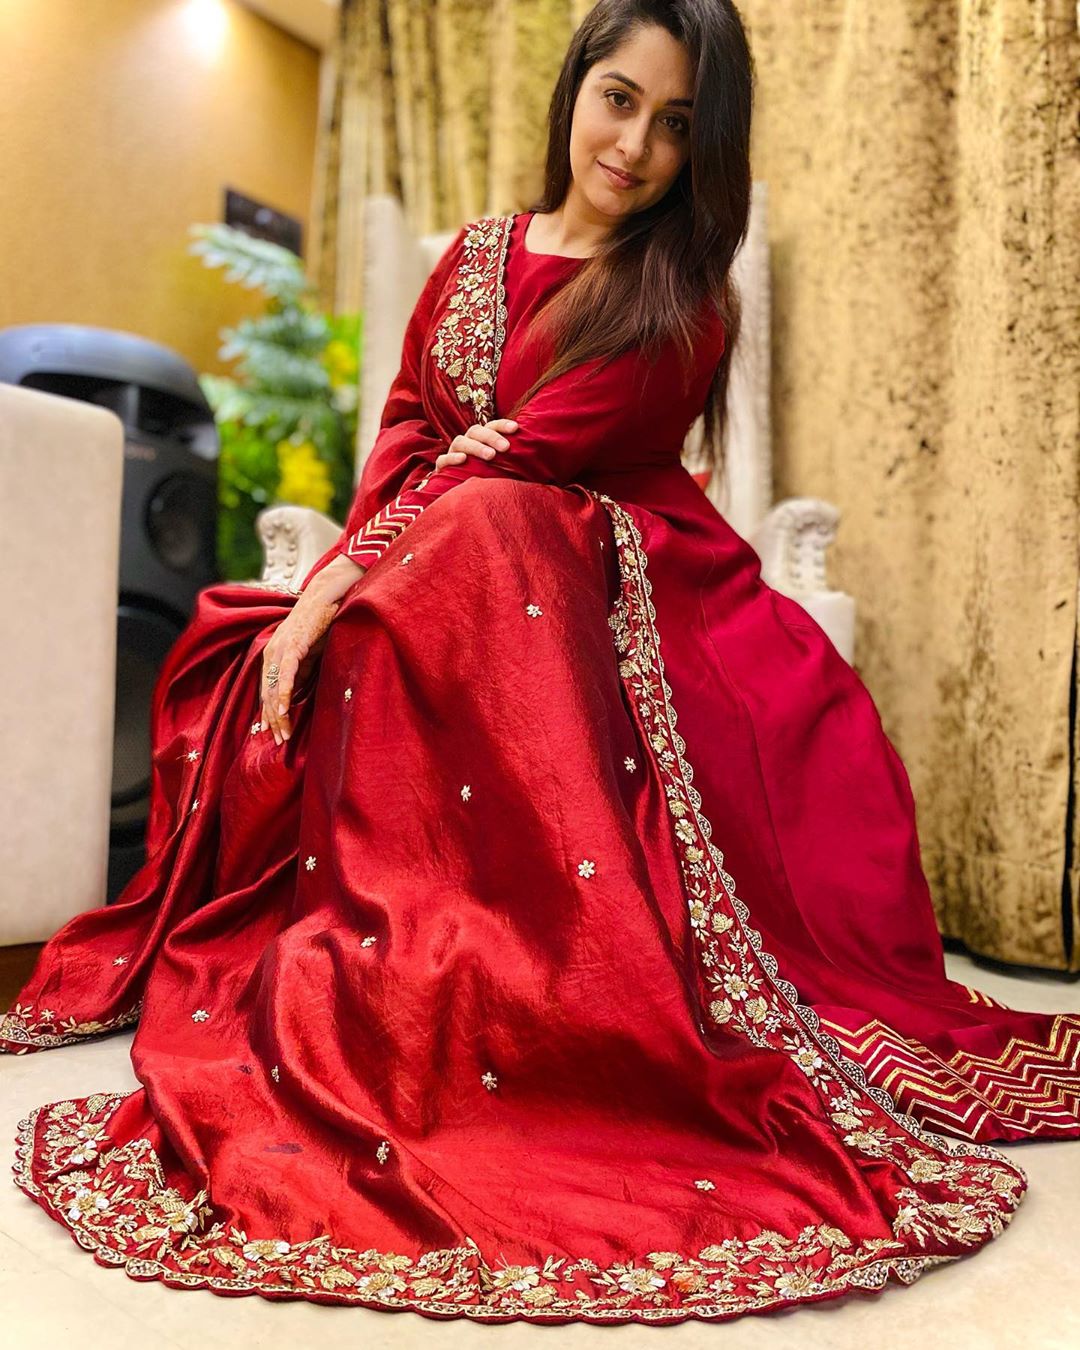 Dipika Kakar Dresses Up In A Red Ensemble, 'Nanad', Saba Ibrahim Cannot ...